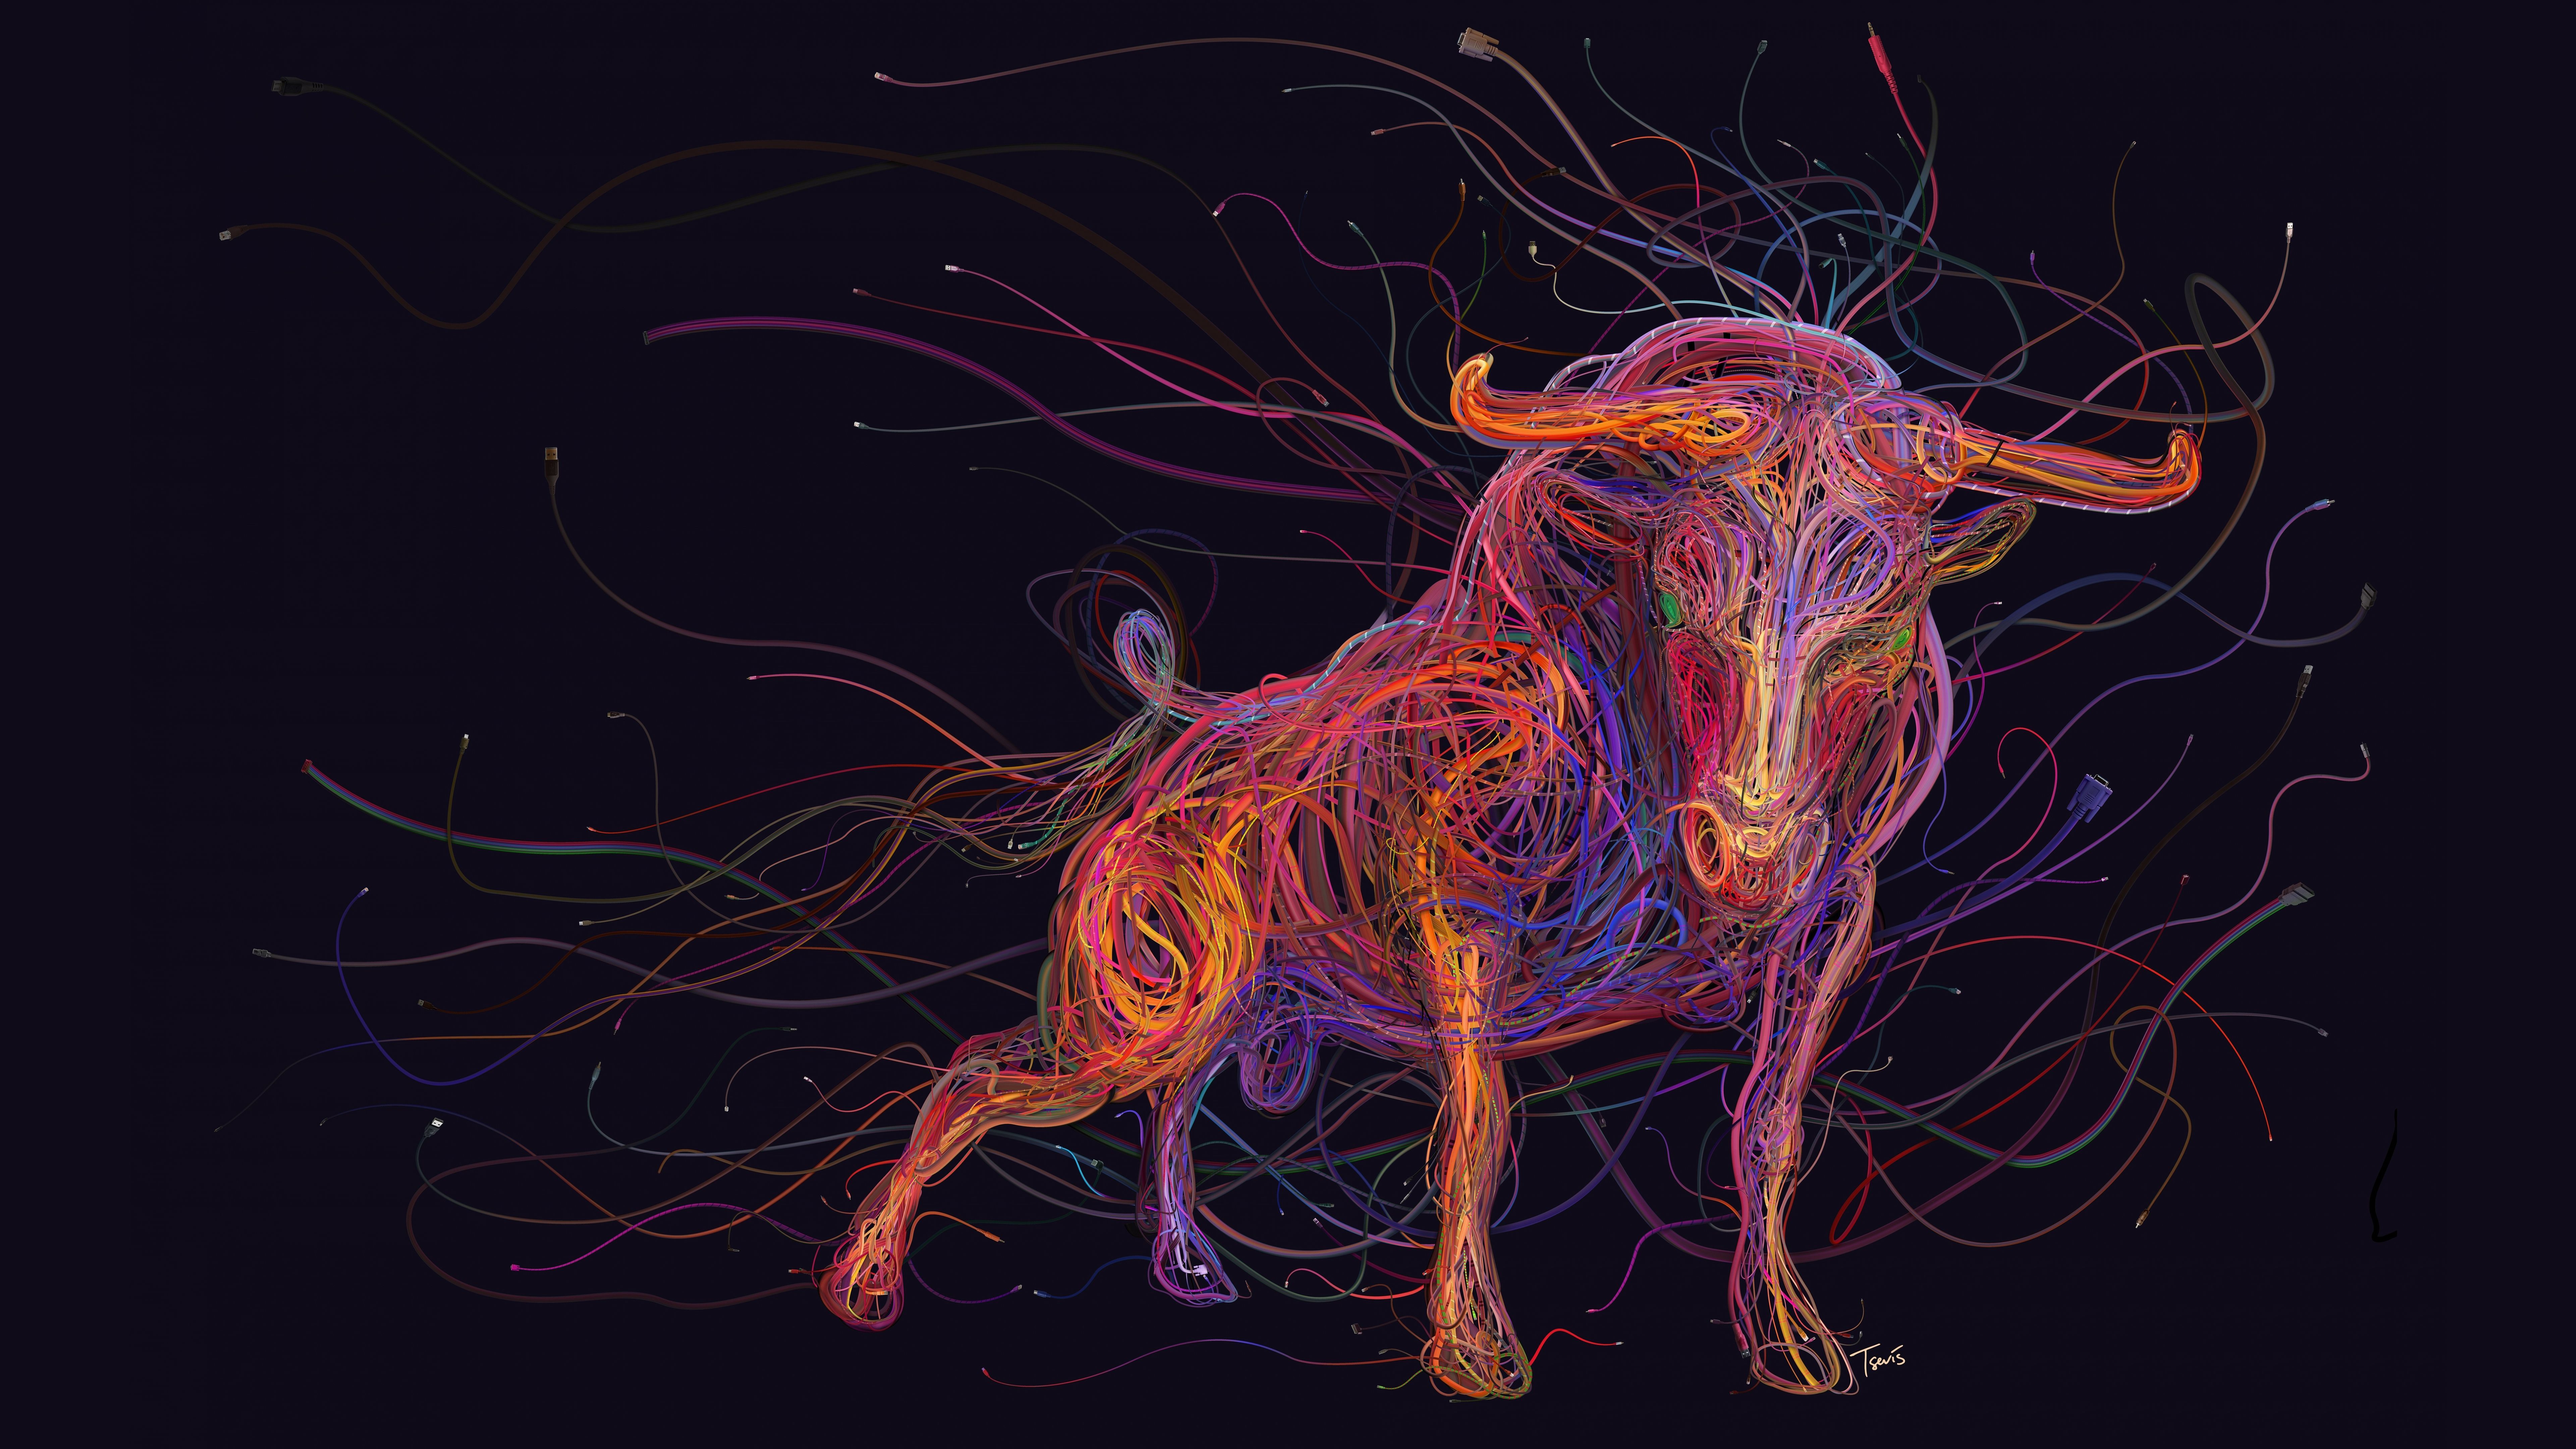 Digital Bull 4K 8K. Taurus wallpaper, Lion artwork, Lion illustration